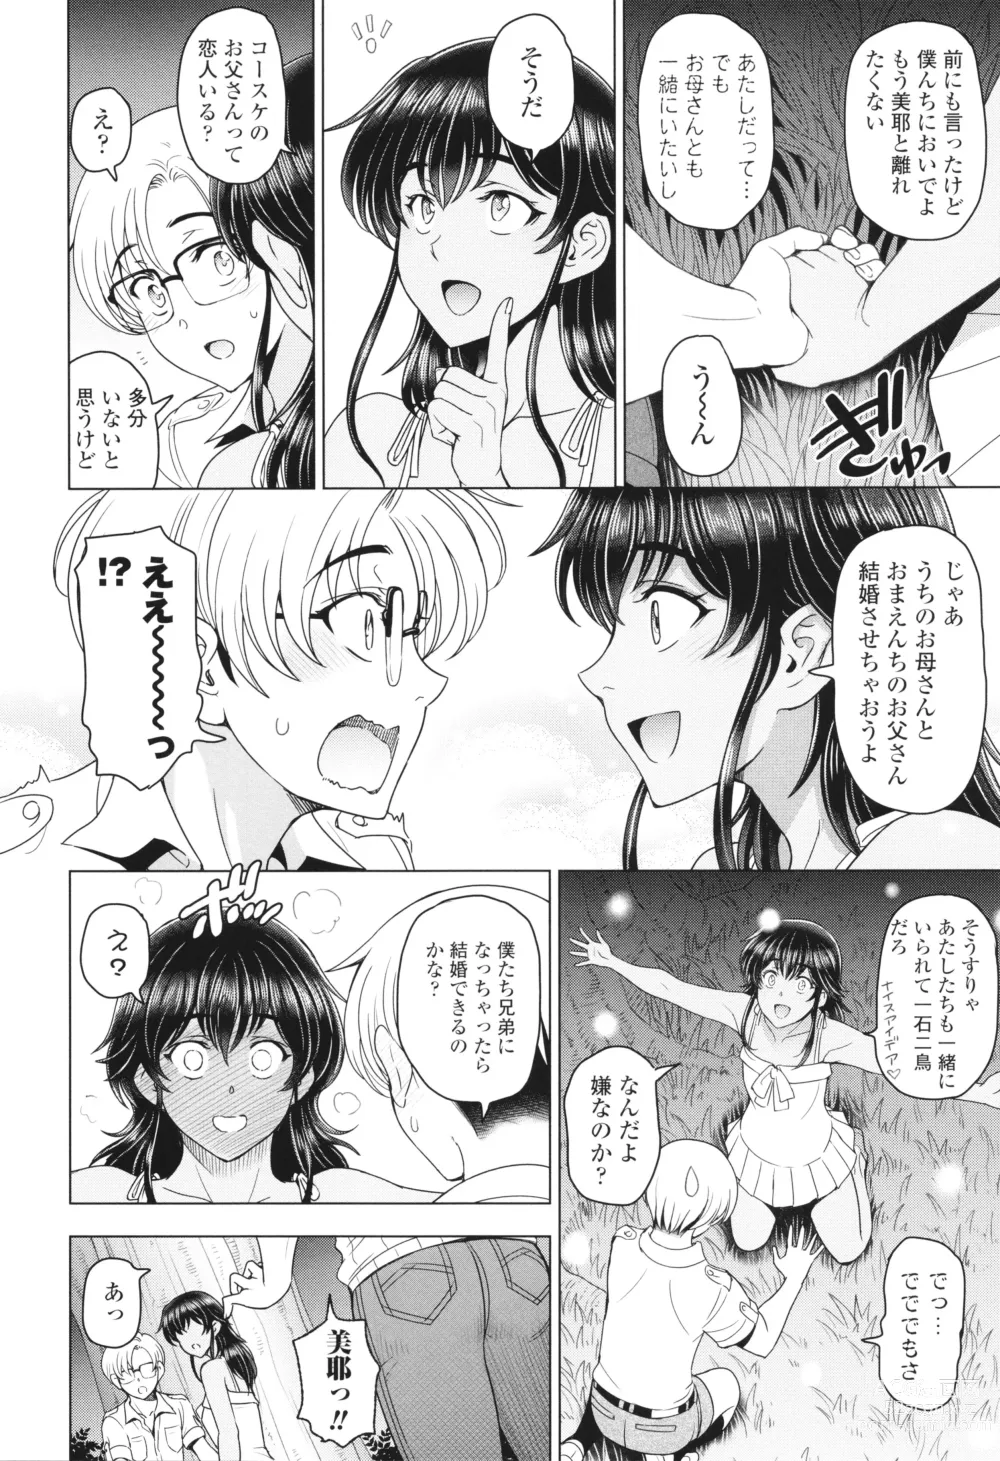 Page 245 of manga Inshu no Kubiki